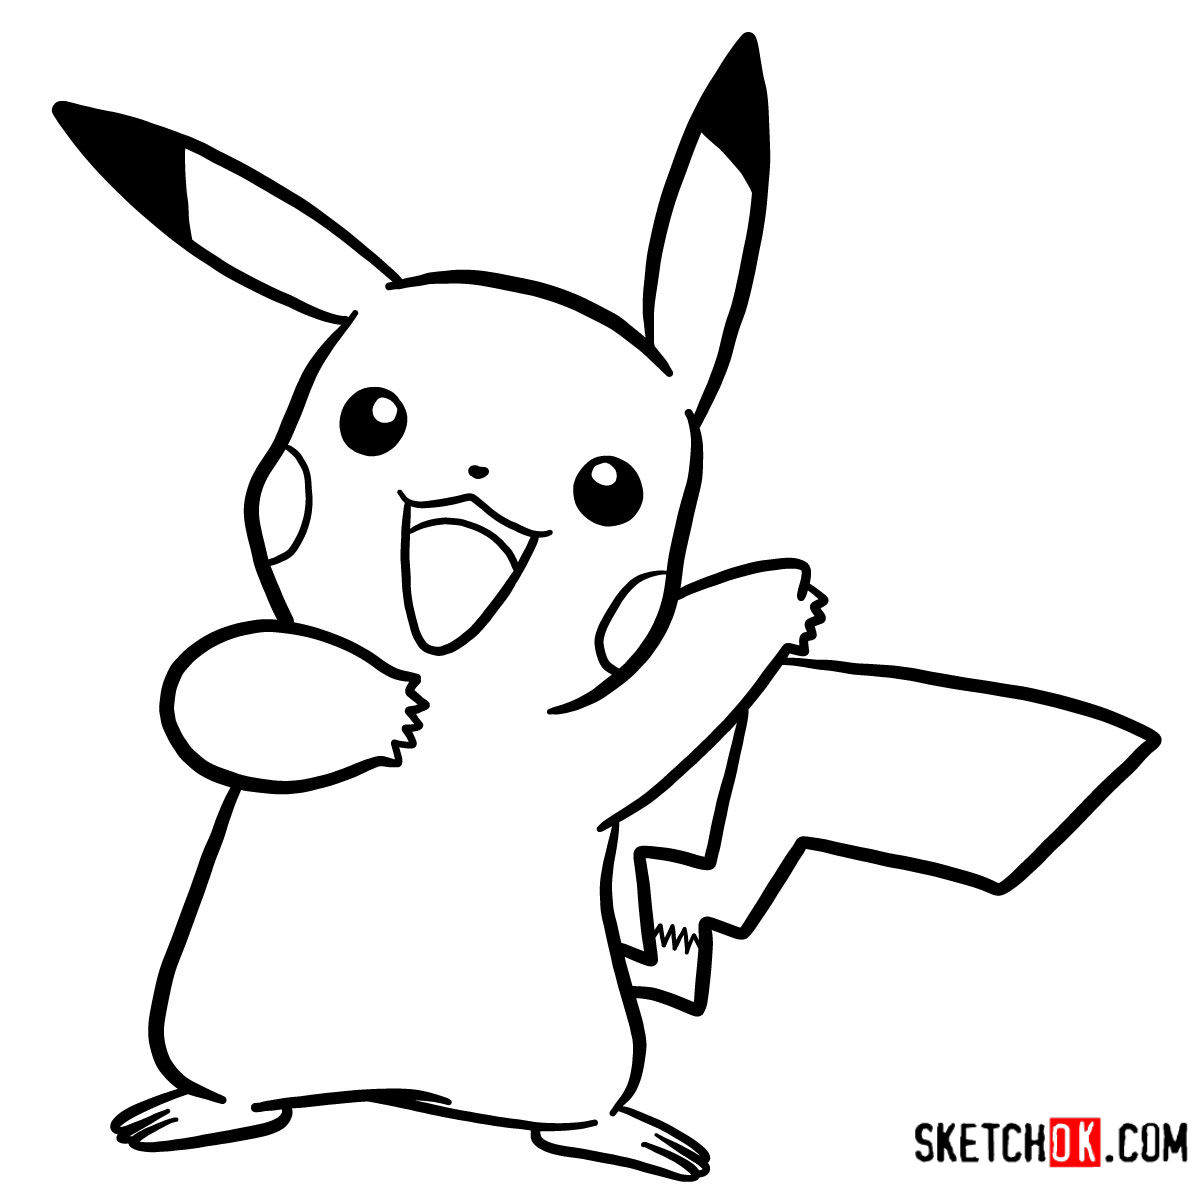 How To Draw Happy Pikachu Pokemon Step By Step Drawing